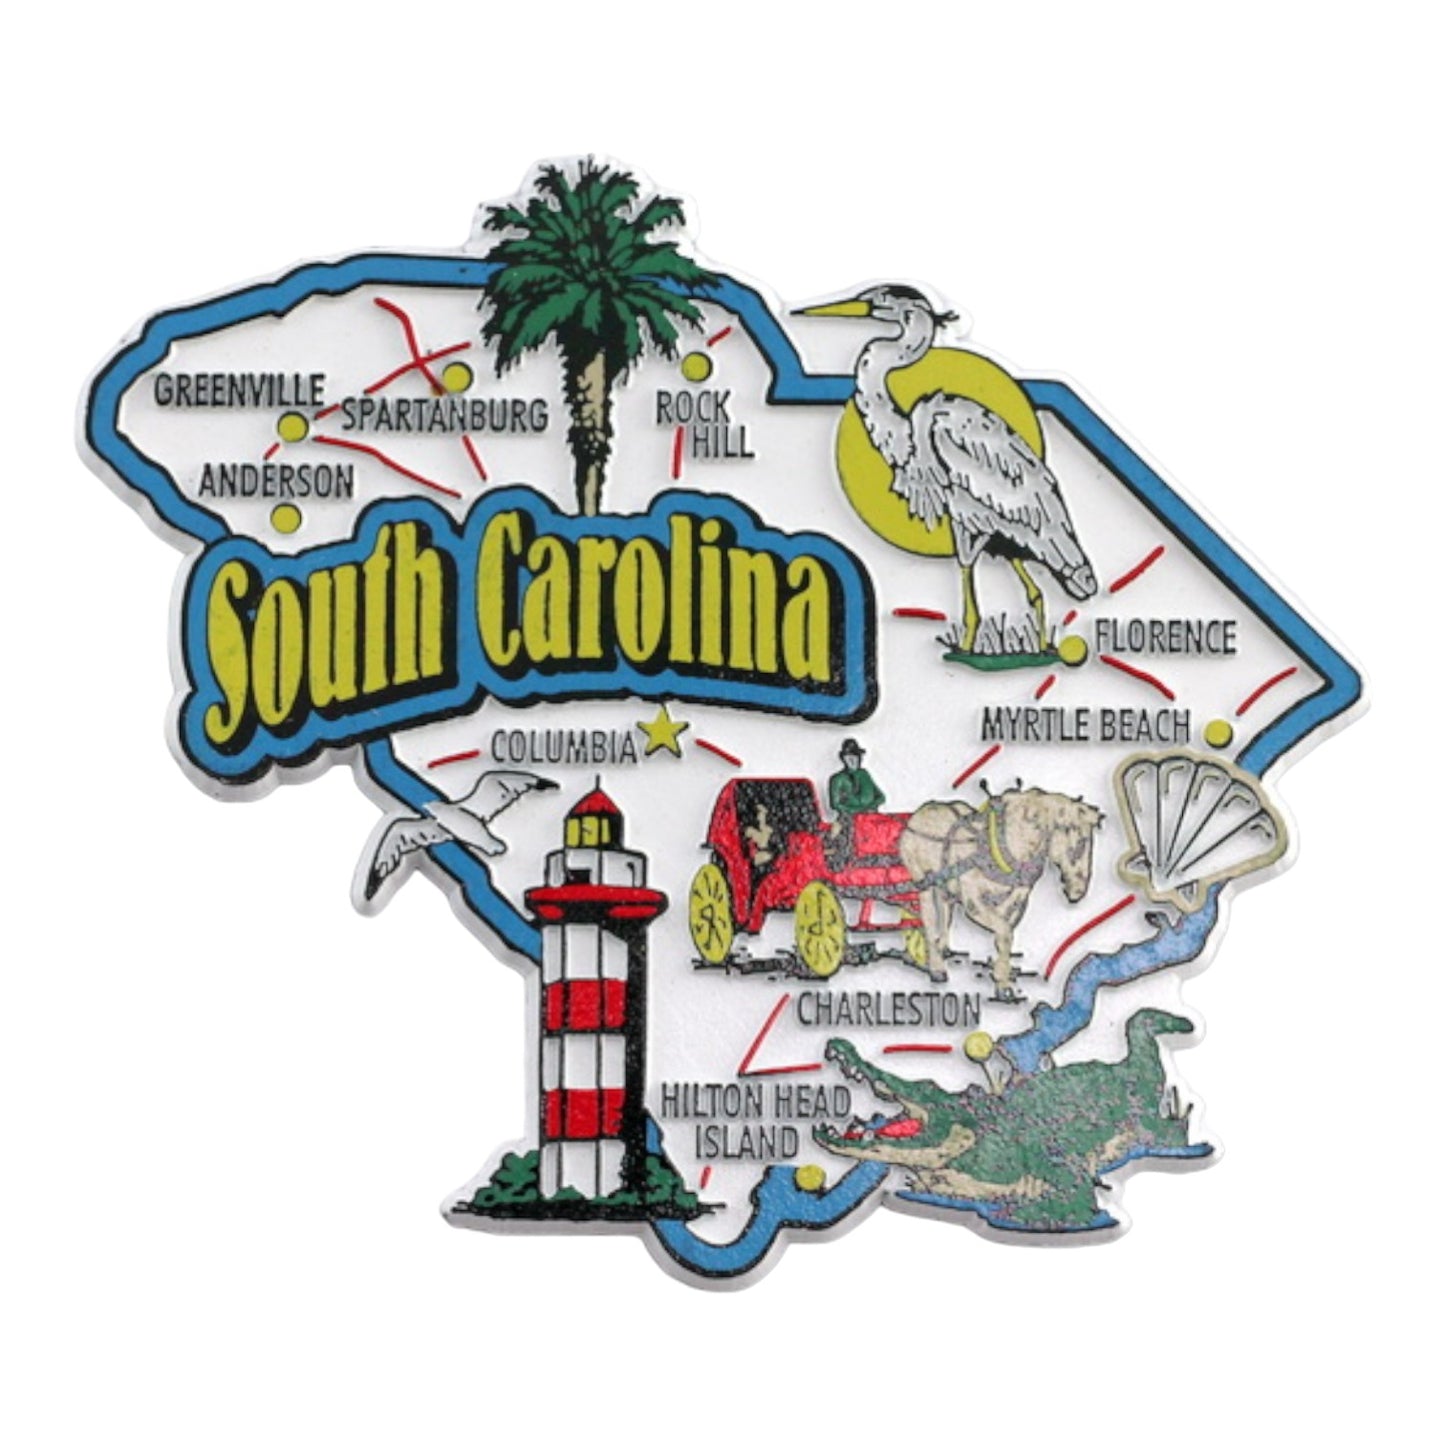 South Carolina State Map and Landmarks Collage Fridge Souvenir Collectible Magnet